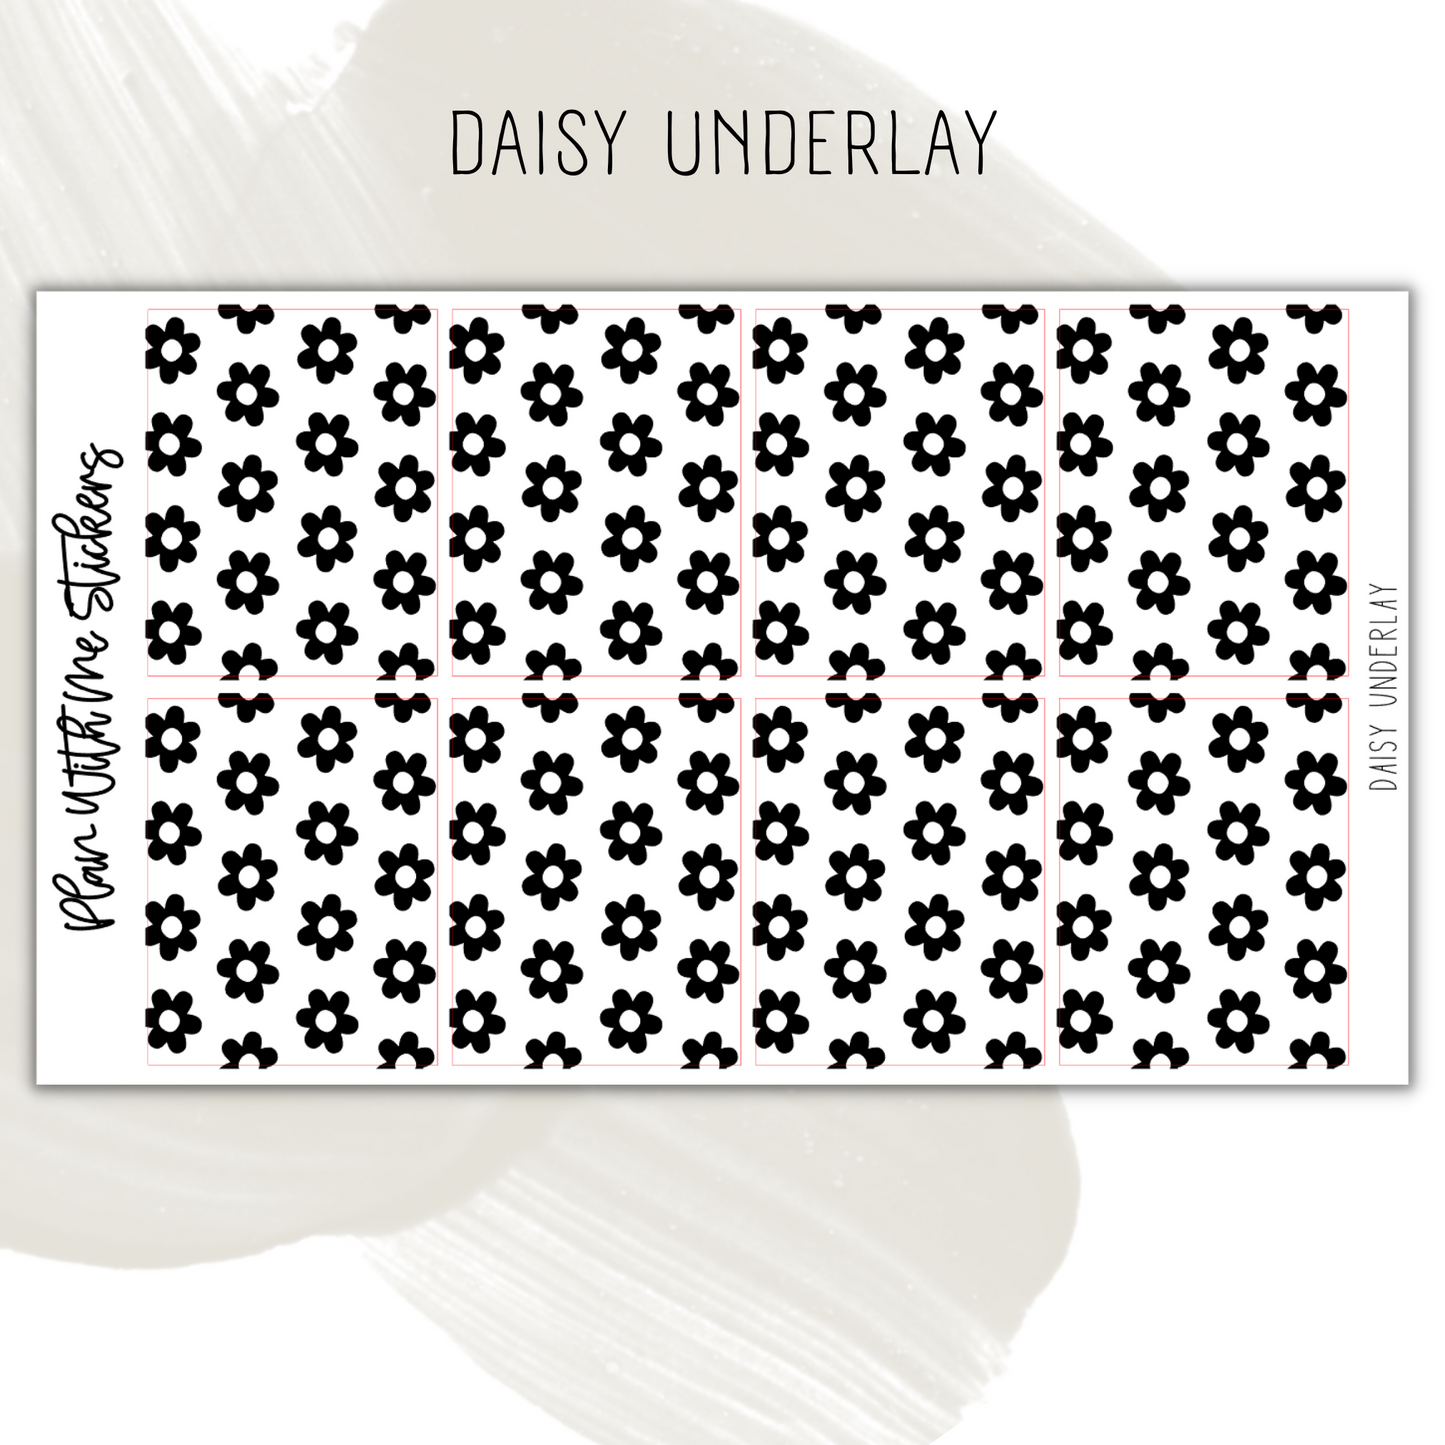 Daisy Underlay